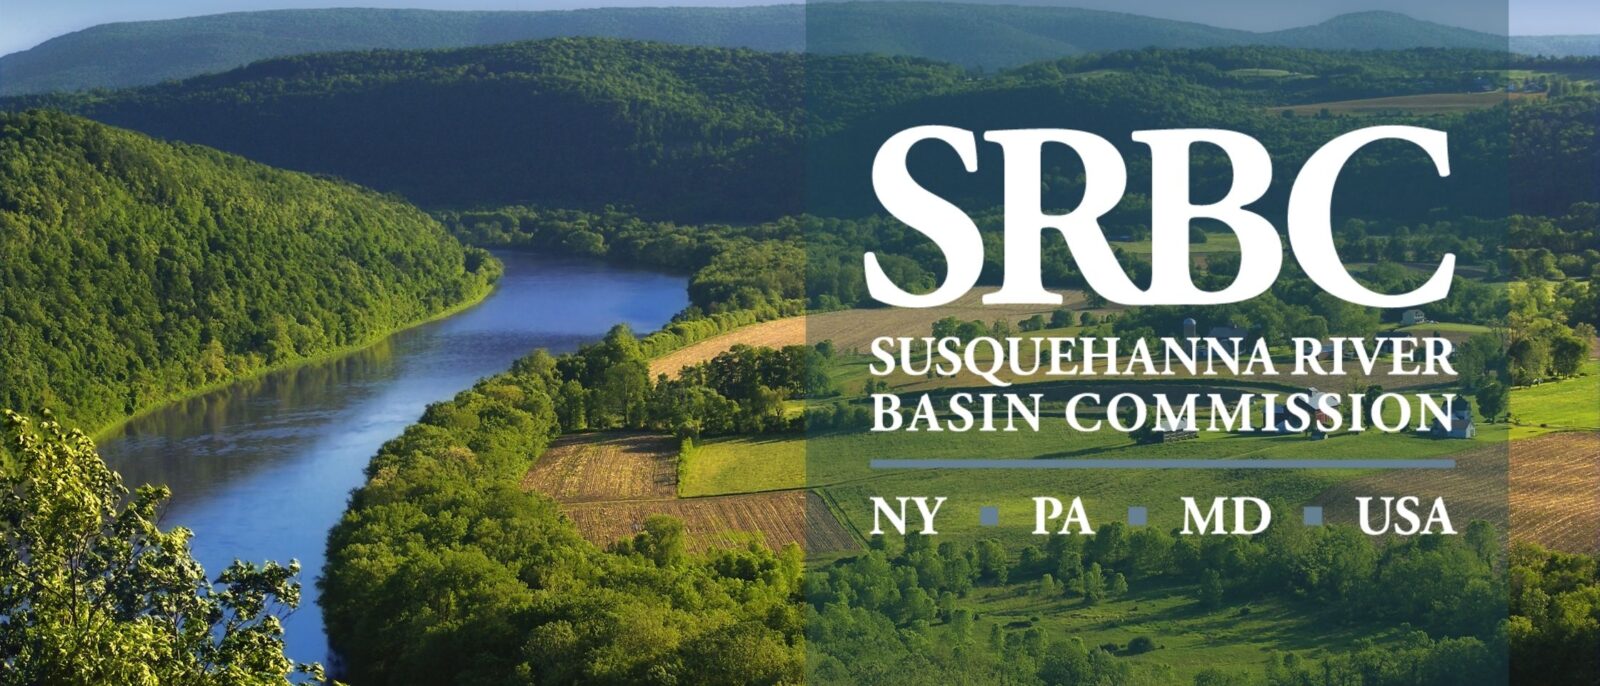 HU congratulates Susquehanna River Basin Commission on 50 years of stewardship